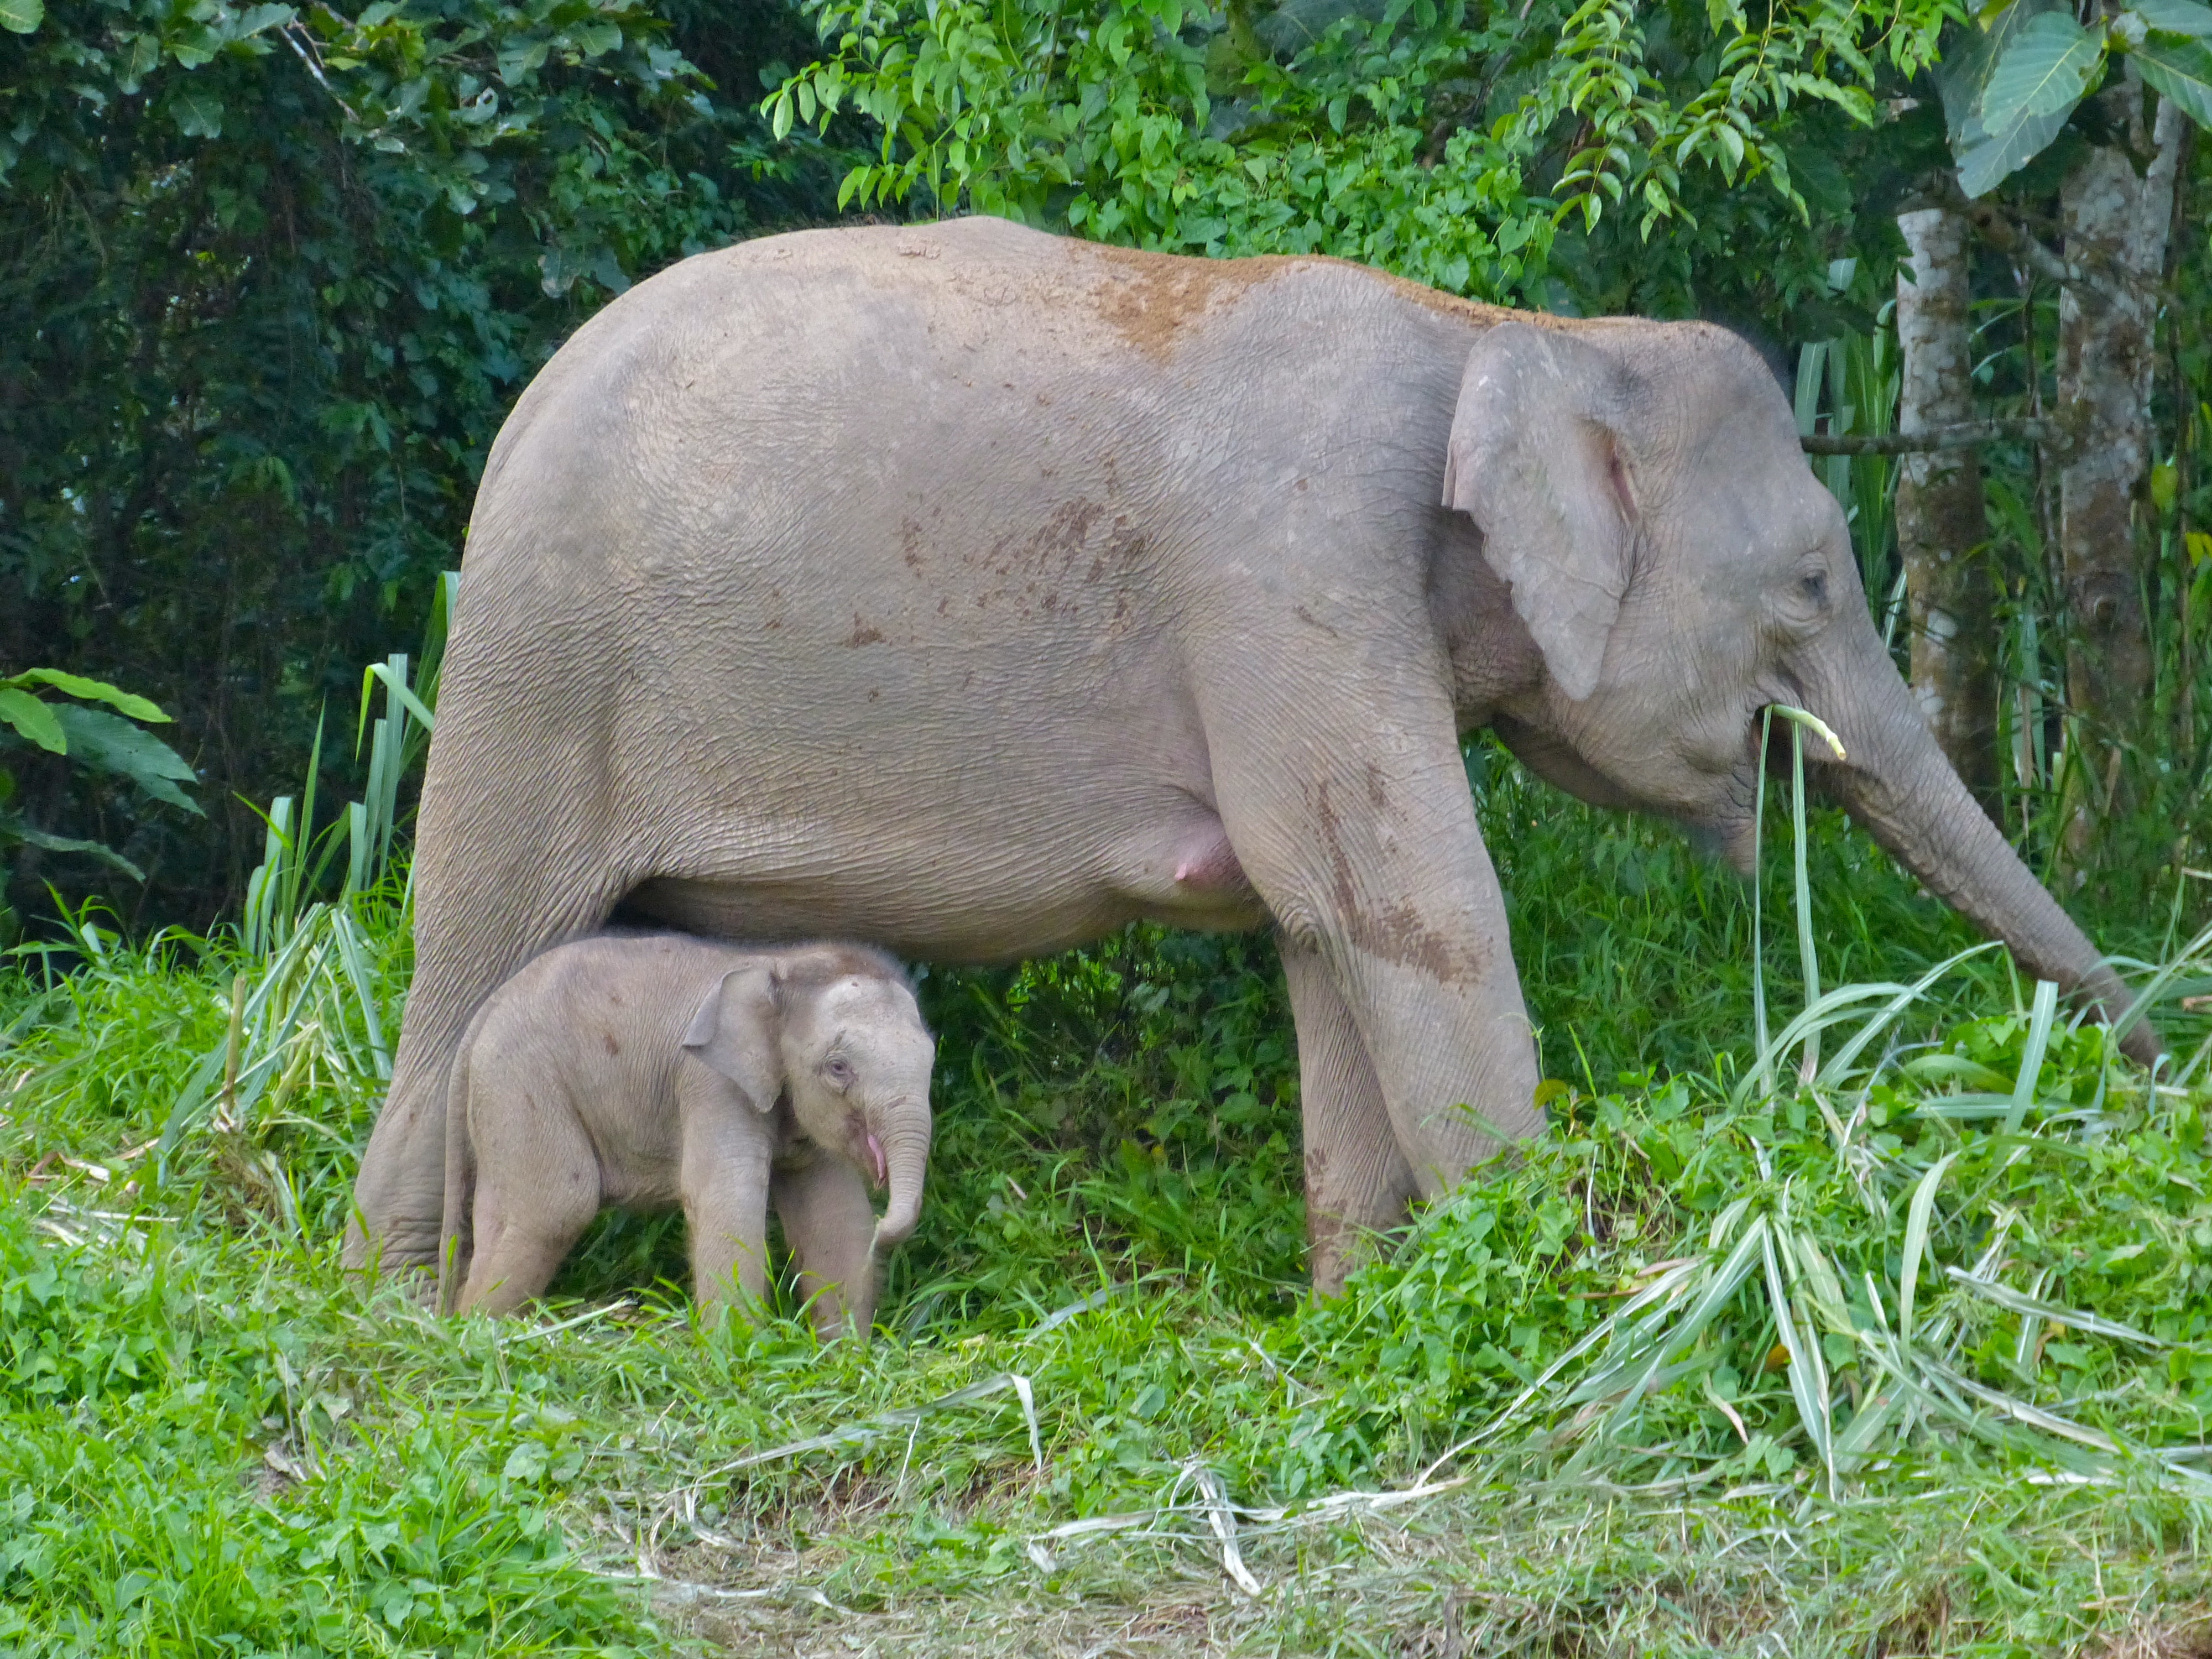 Pygmy Elephants (Elephas maximus borneensis) mother and baby near the Kinabatangan River, Sukau, Sabah, Malaysia. Photo taken on September 22, 2012.